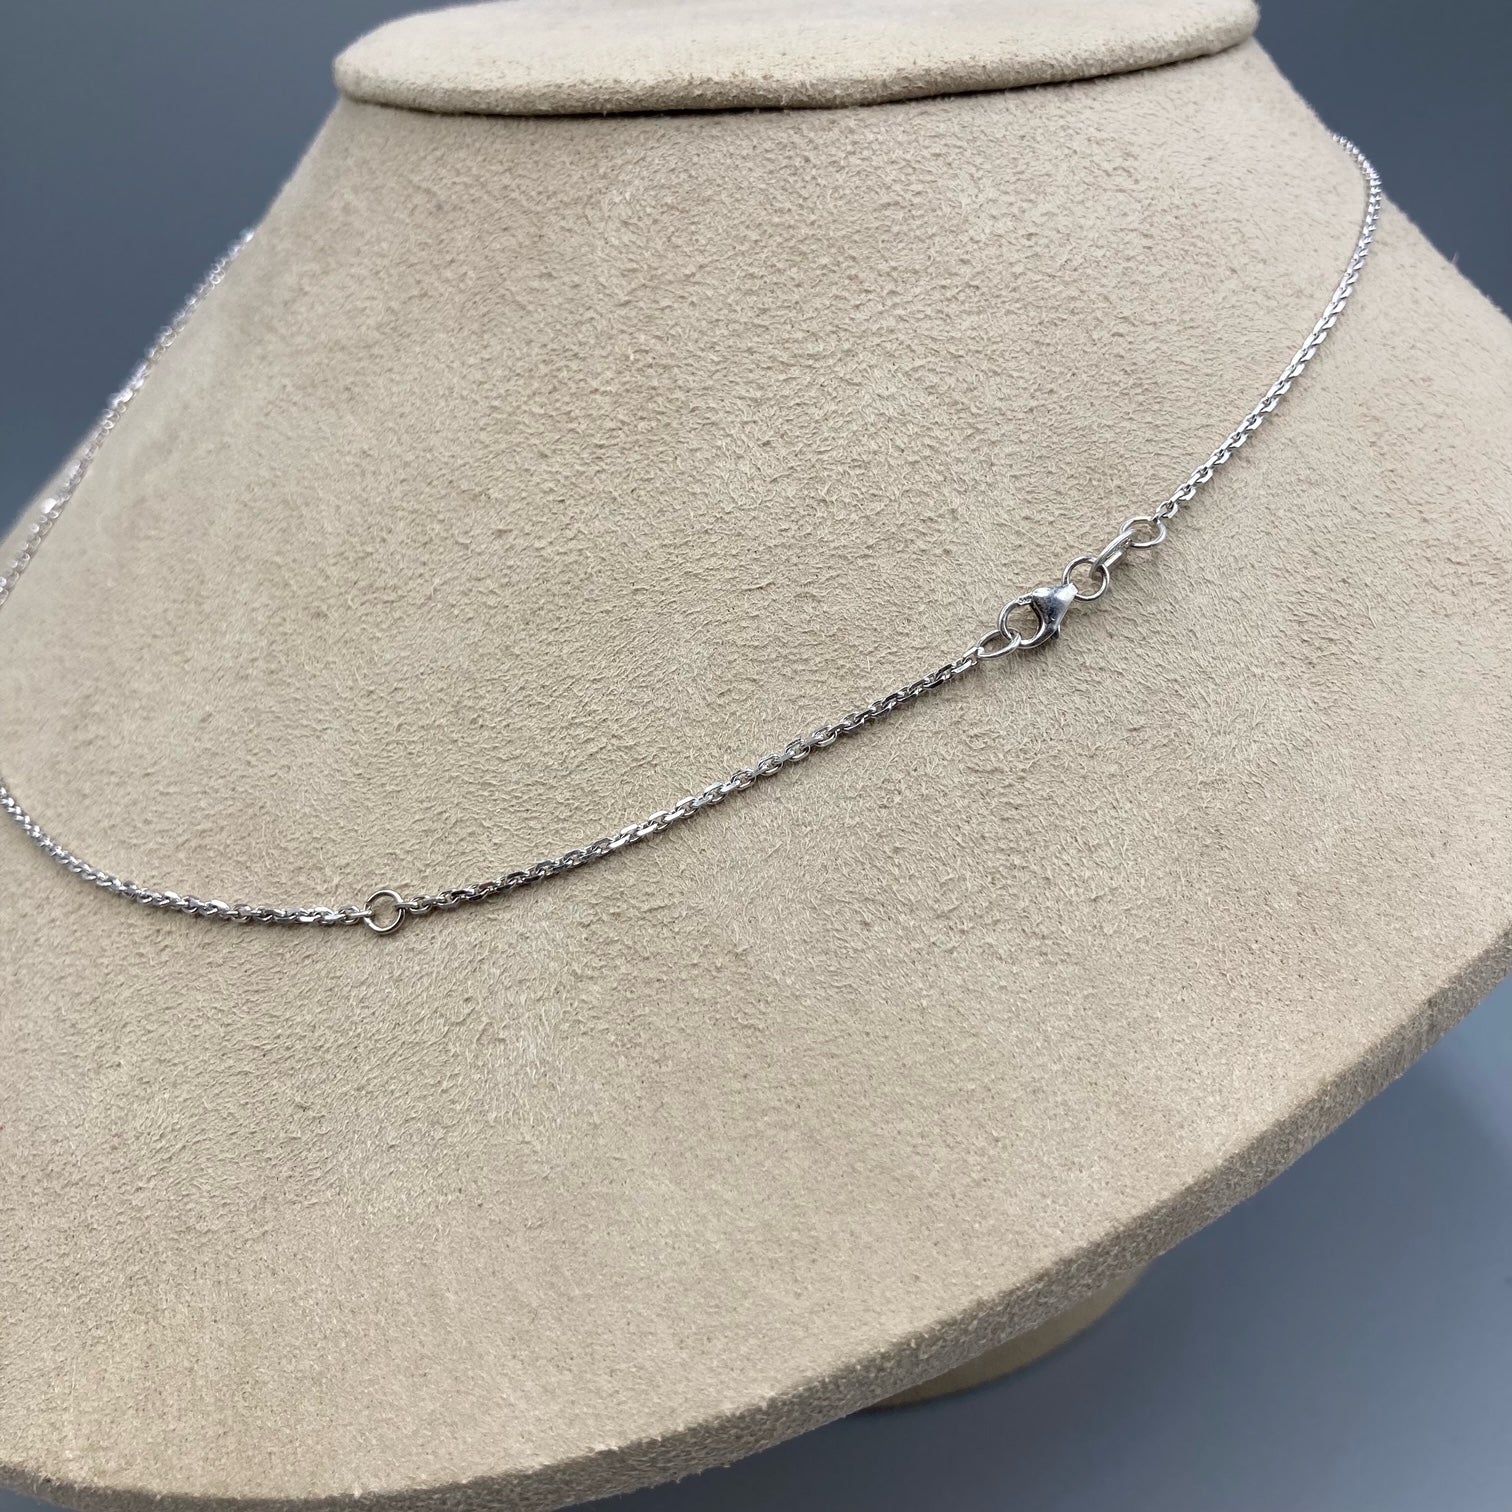 Custom Round Brilliant Diamond Pendant on 14k Gold Italian Chain